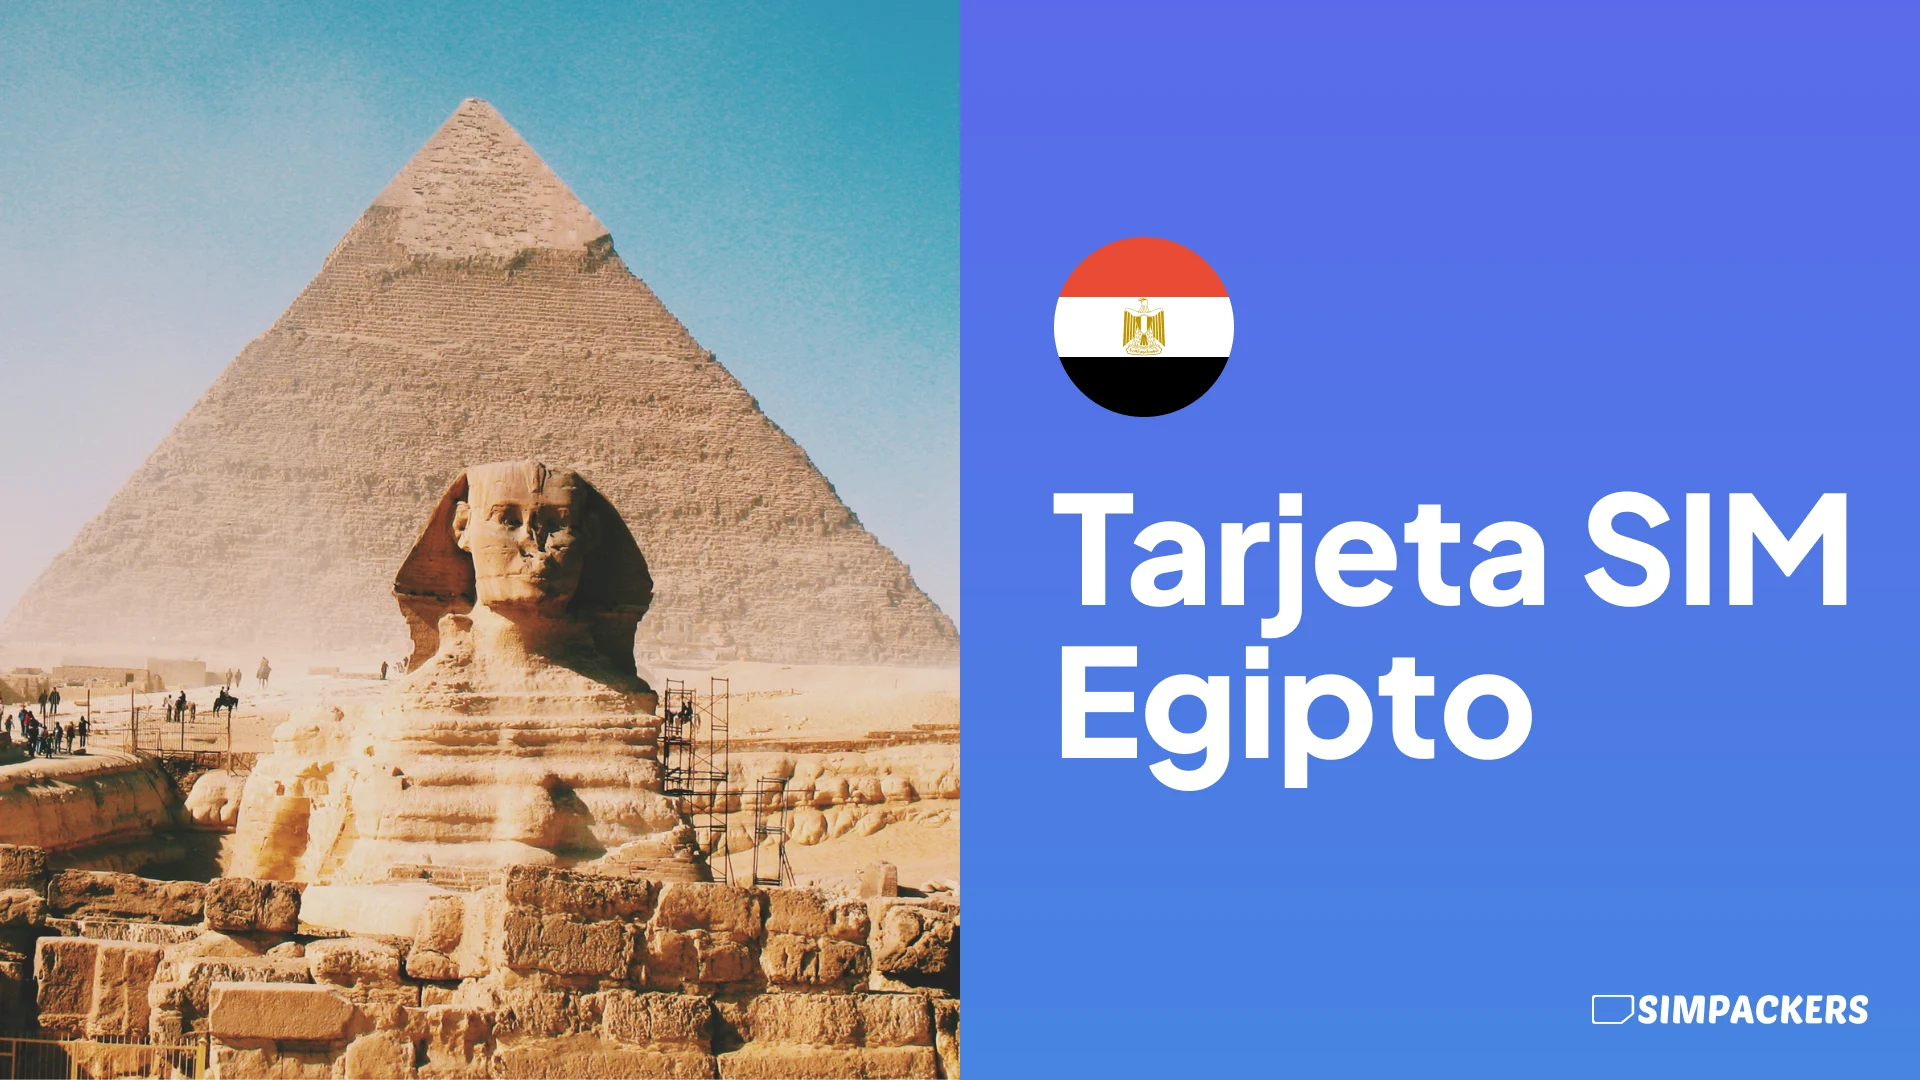 ES/FEATURED_IMAGES/tarjeta-sim-egipto.webp